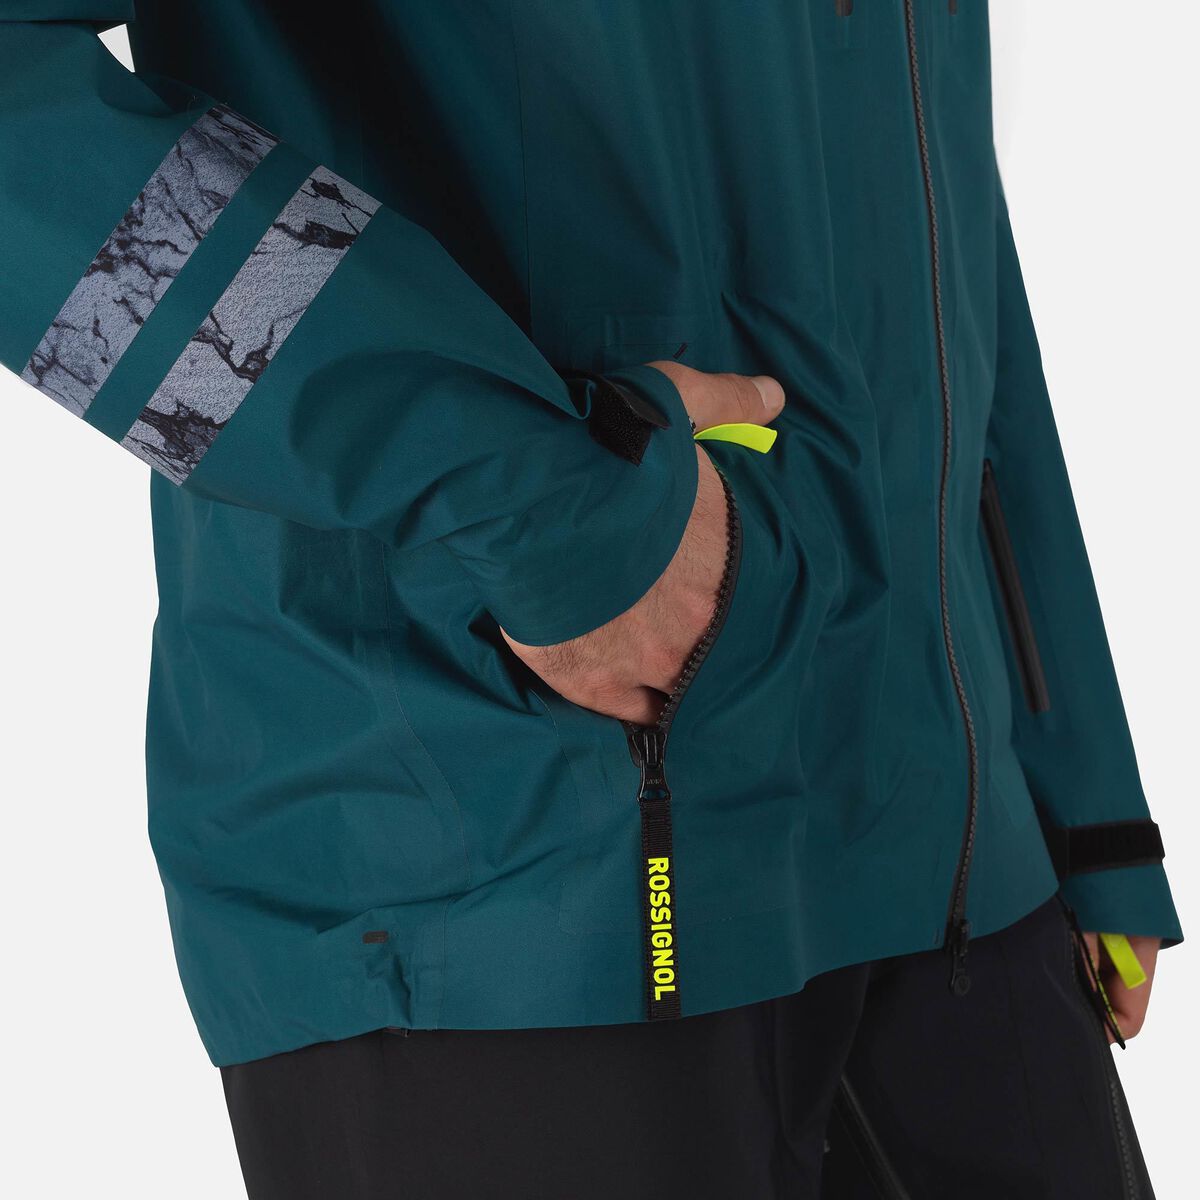 Rossignol Men's Atelier S Ride Free ski/snowboard jacket blue